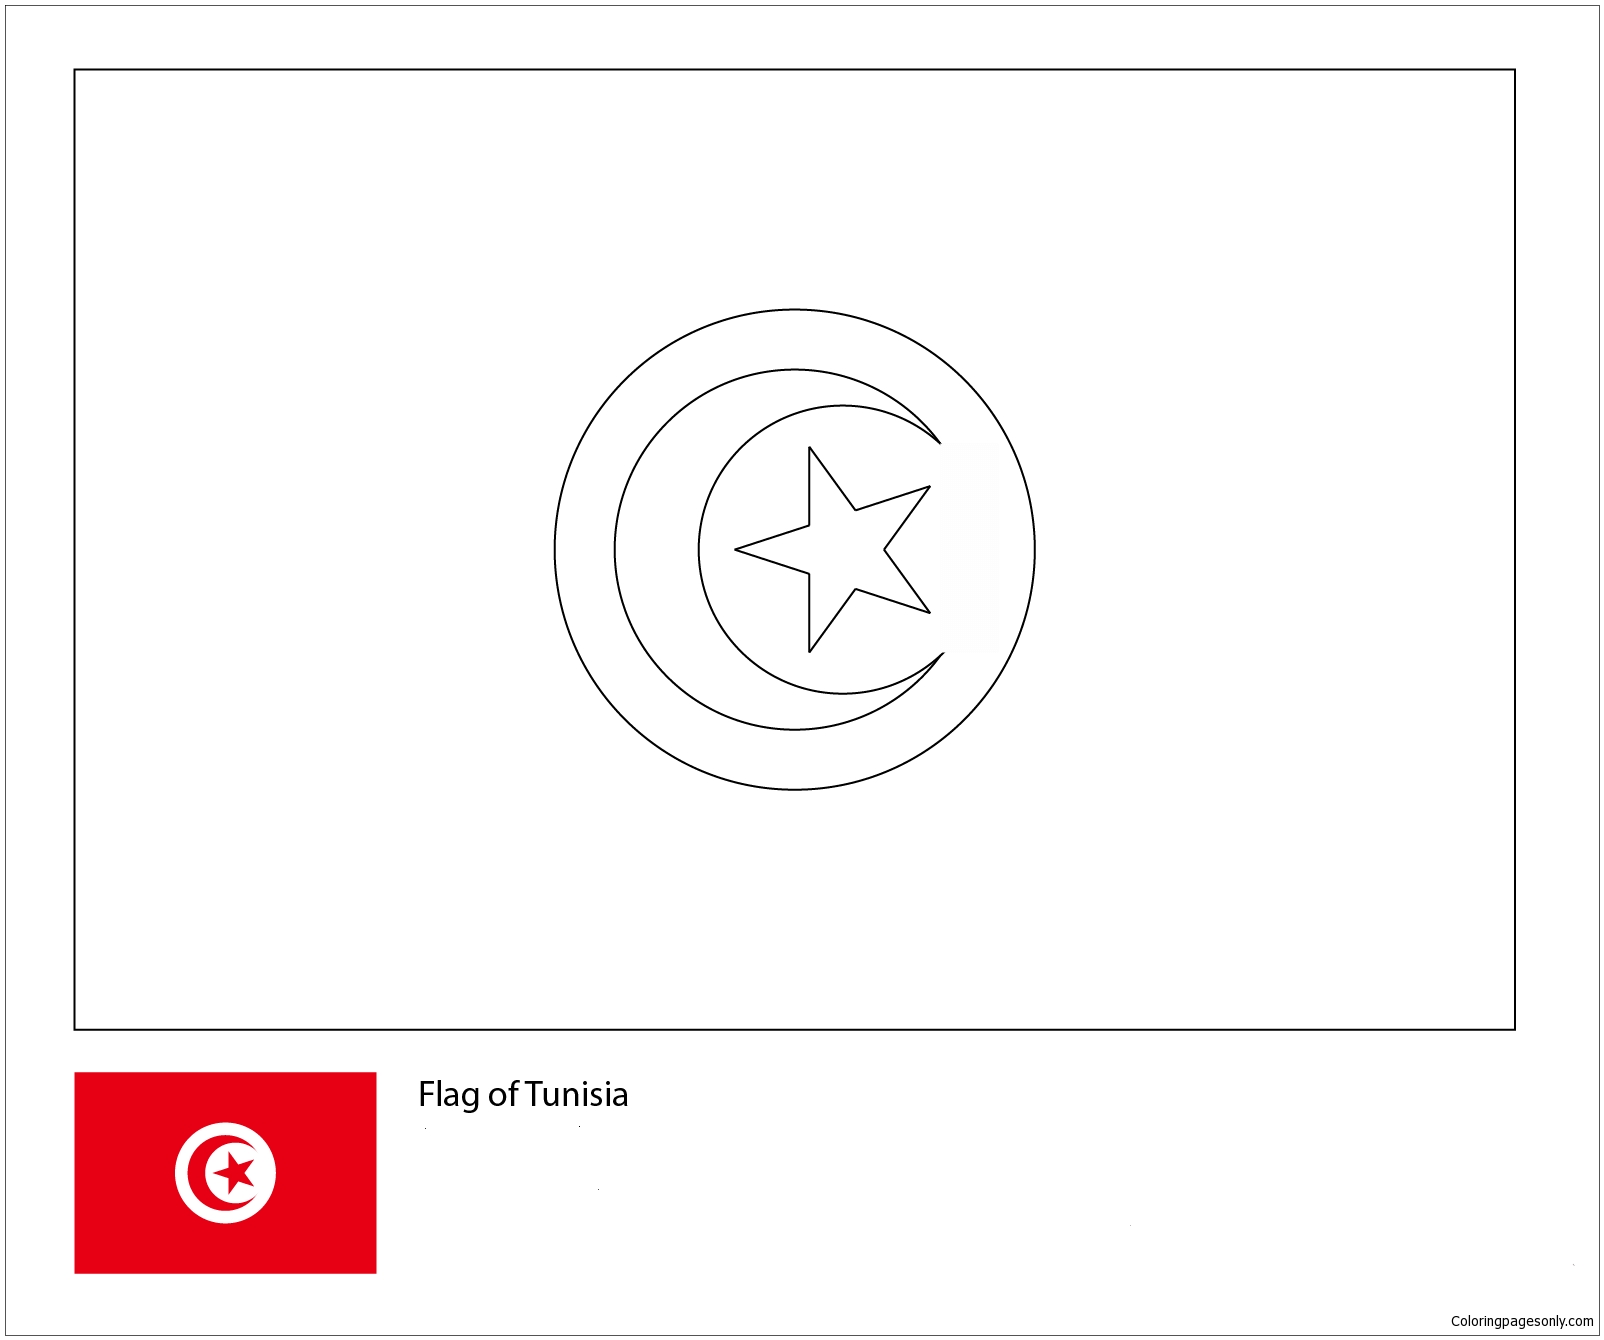 Флаг Туниса-ЧМ-2018 из флагов ЧМ-2018